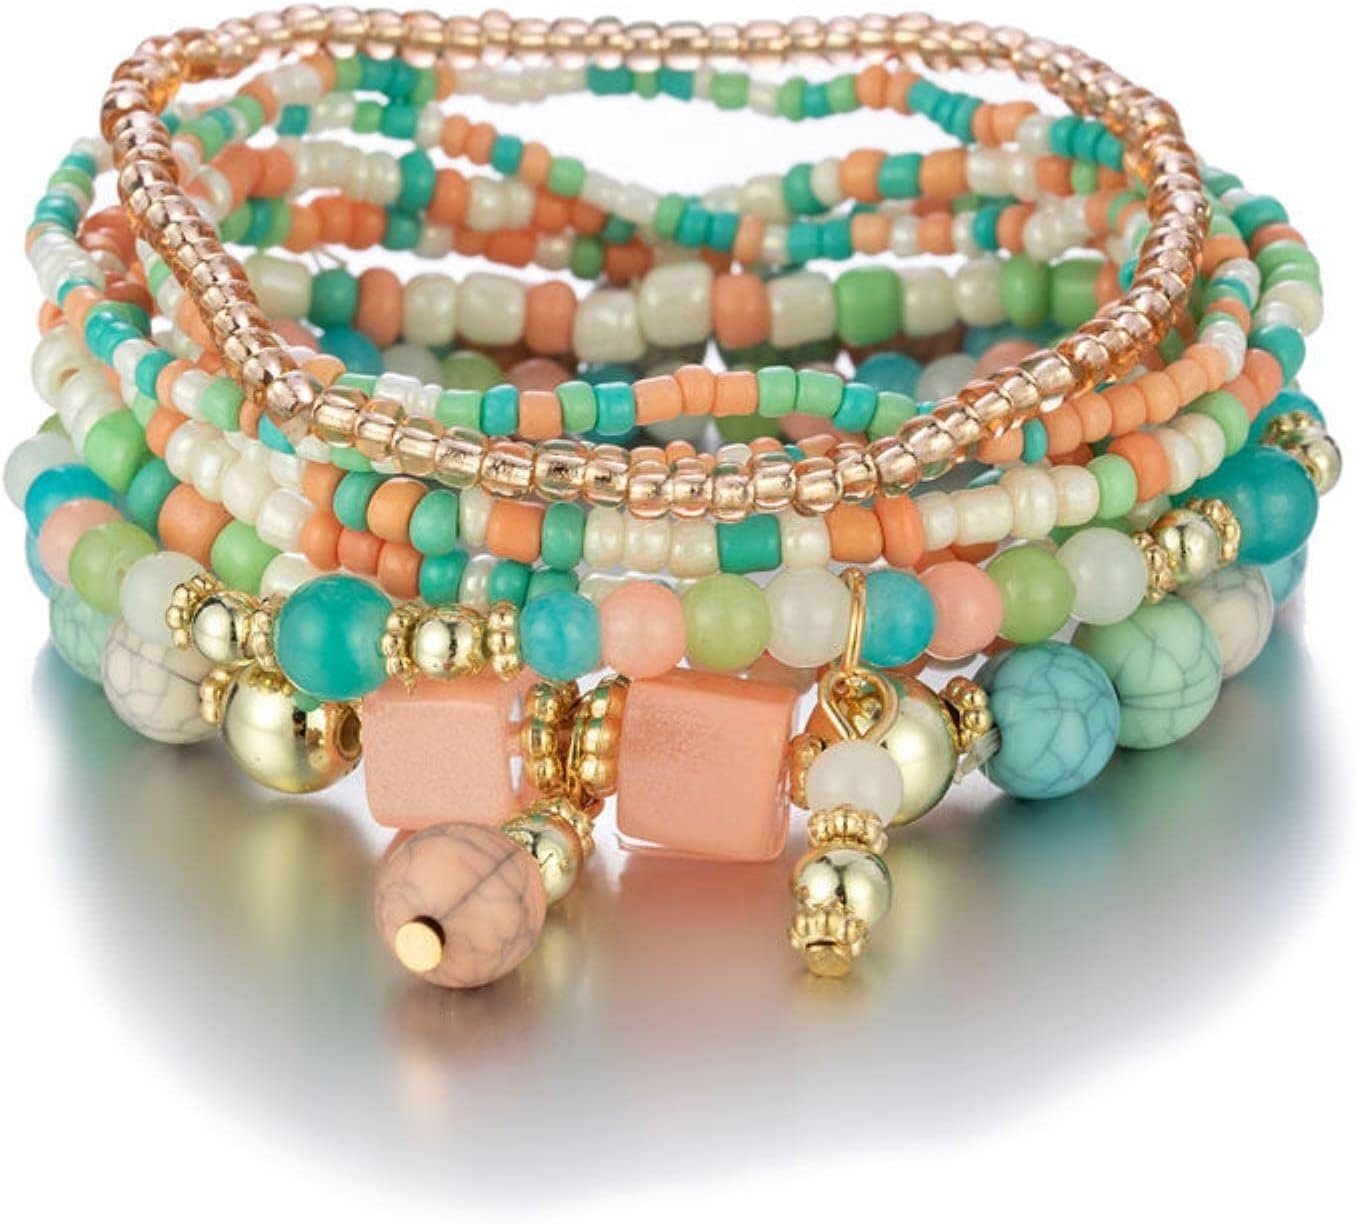 Alster  Herz Alster Herz Bead-Armband-Set Mehrschichtiges Bead Armband, bunt, trendy, mit Perlen J0450 (1-Teilig), boho Stil, dehnbar colorful